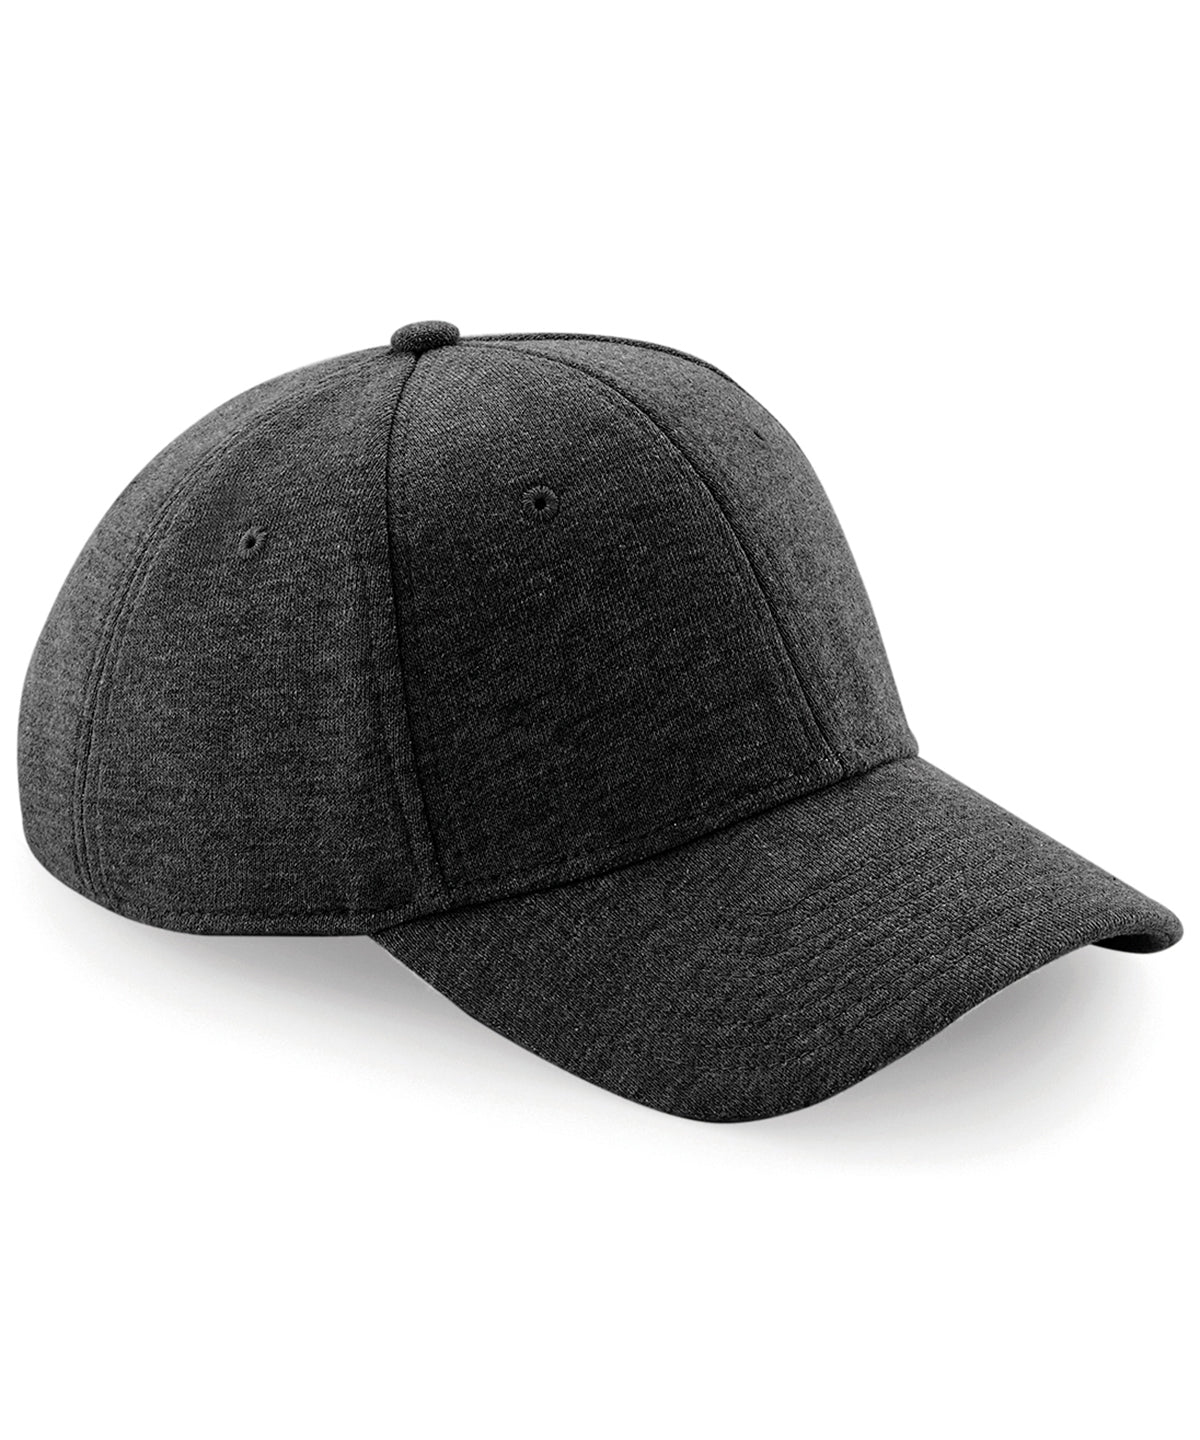 Personalised Caps - Dark Grey Beechfield Jersey athleisure baseball cap